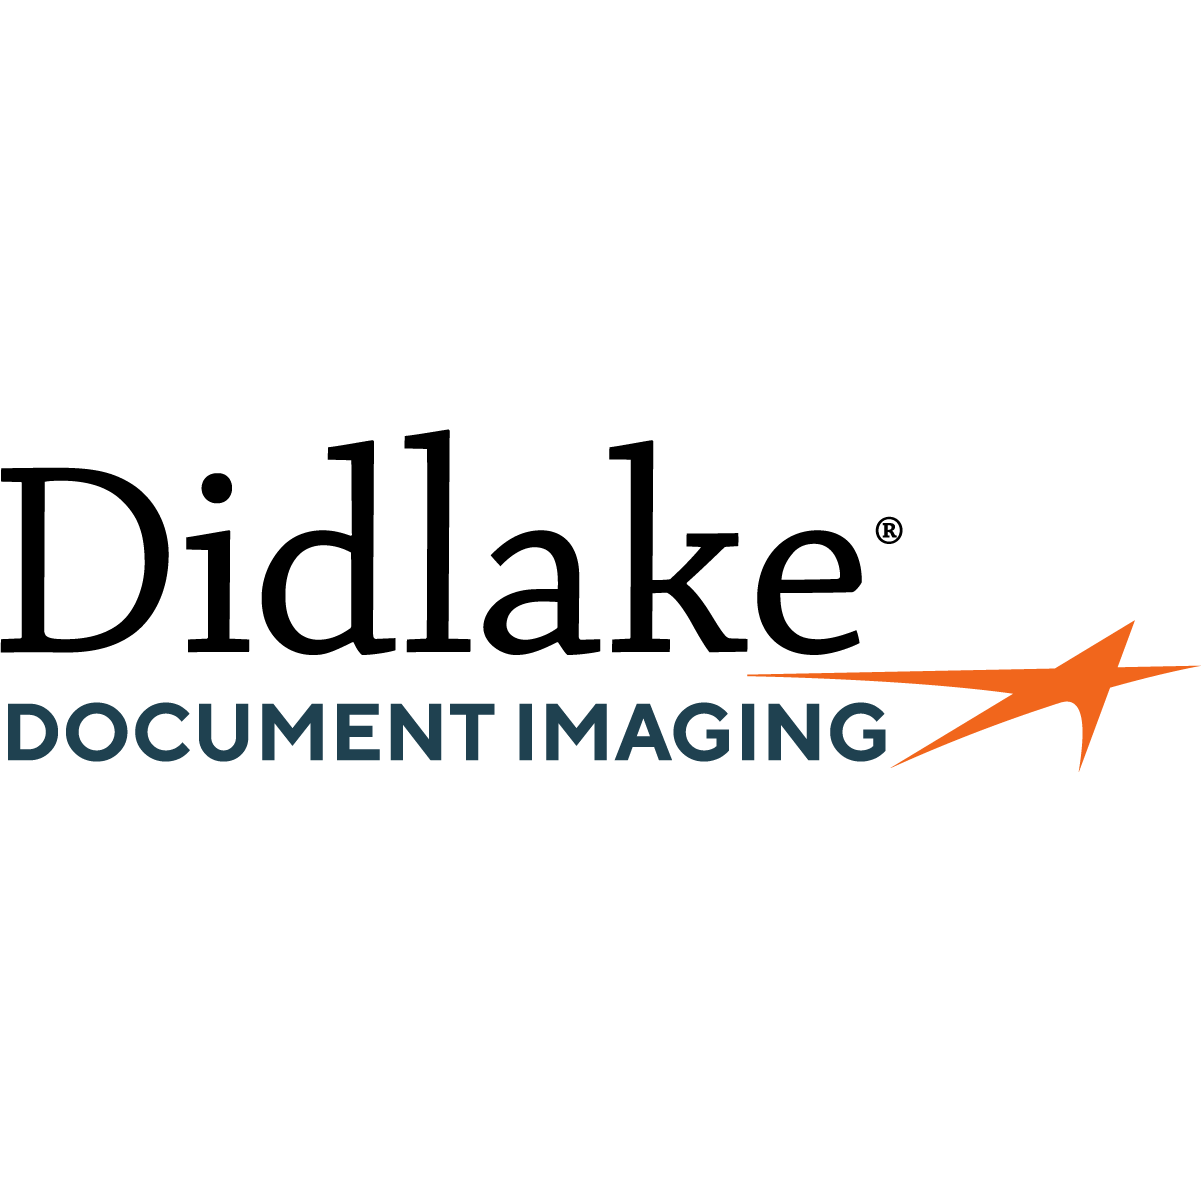 Didlake Document Imaging